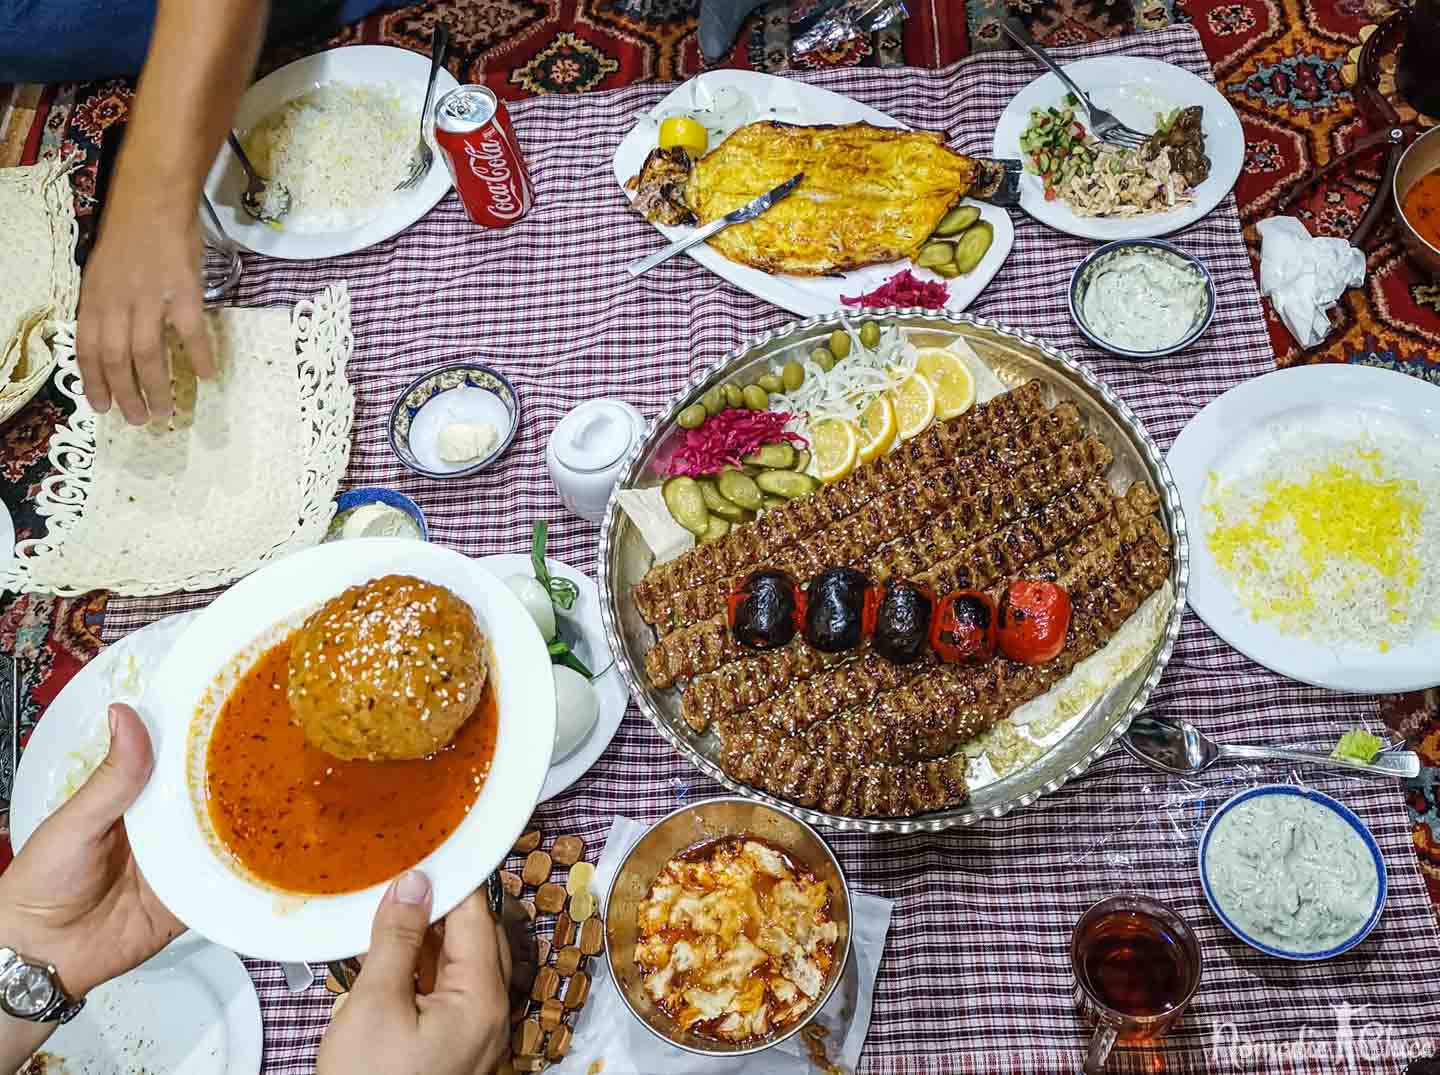 Kebab Iranian food and spices, tee saffron